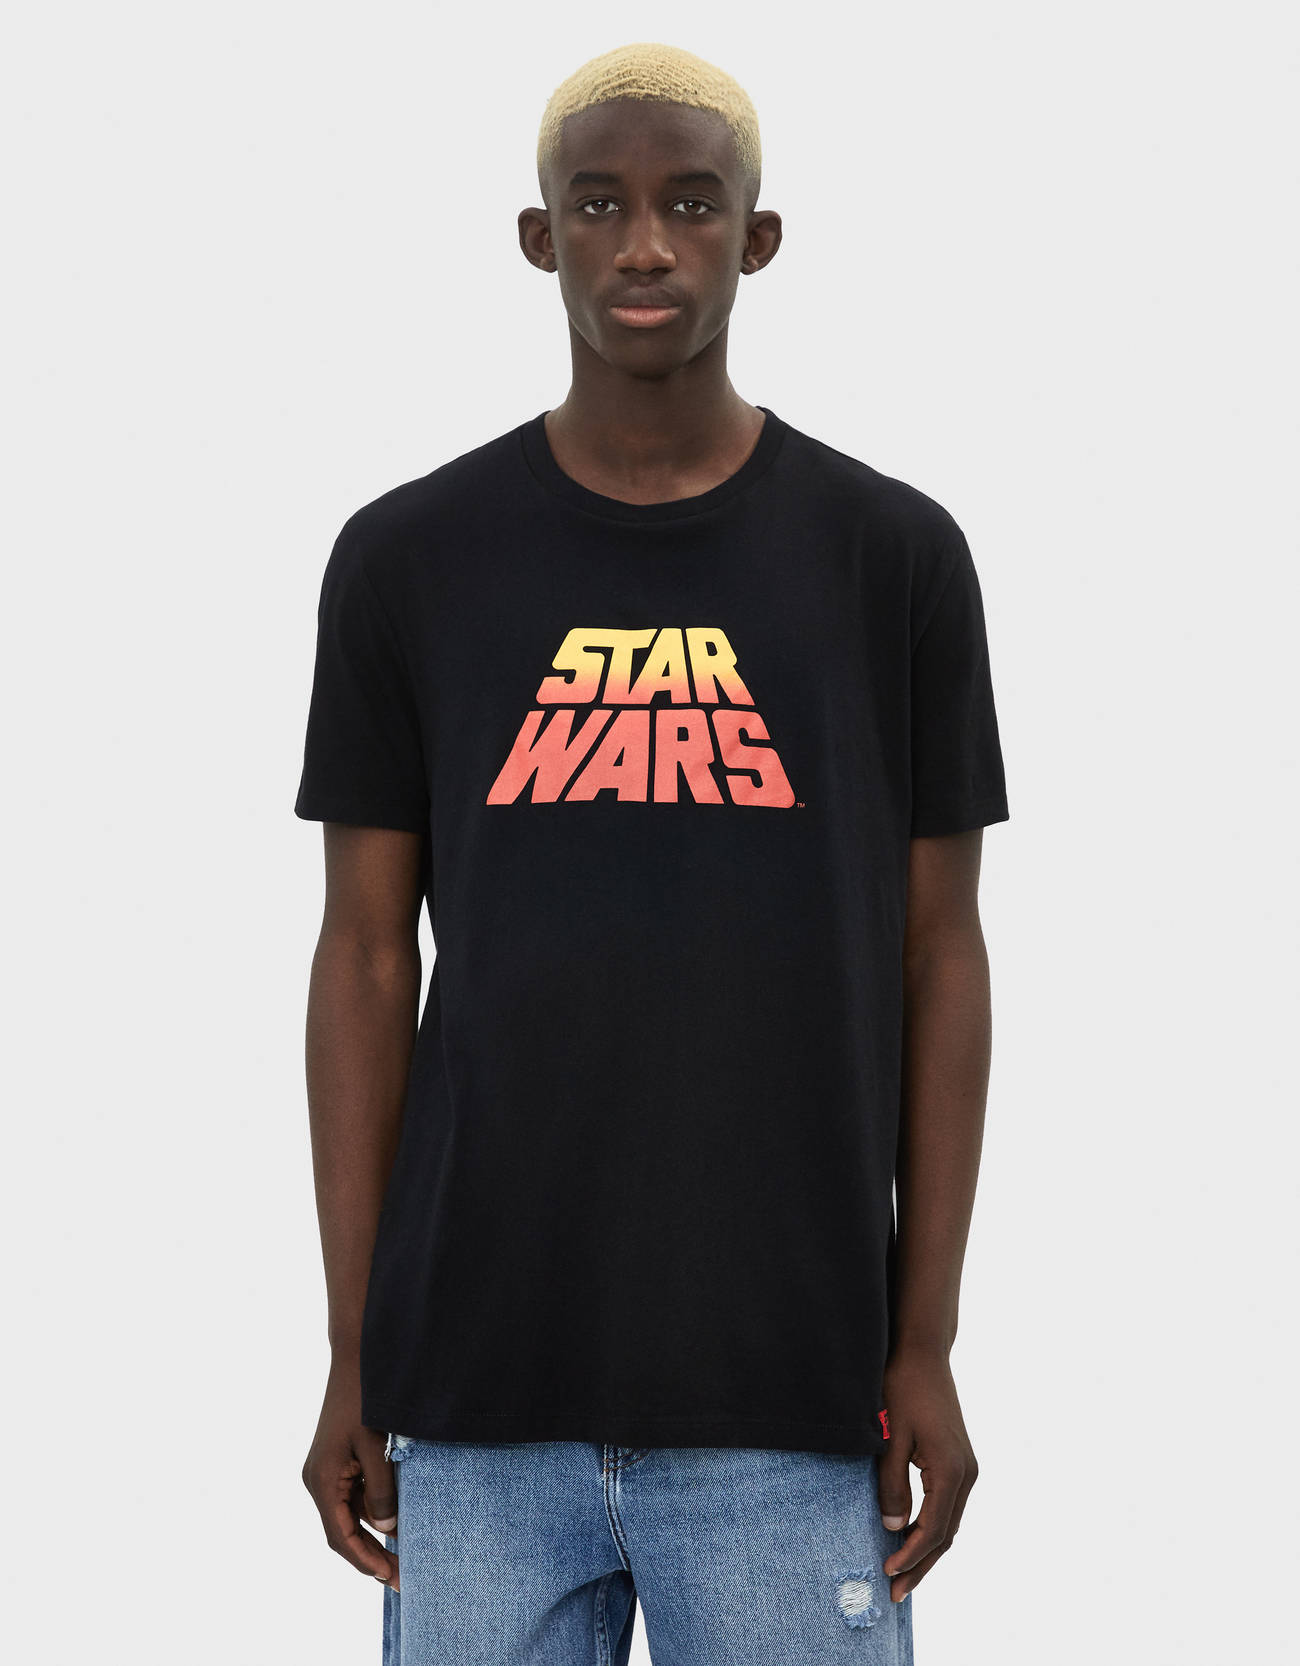 star wars t shirt mens